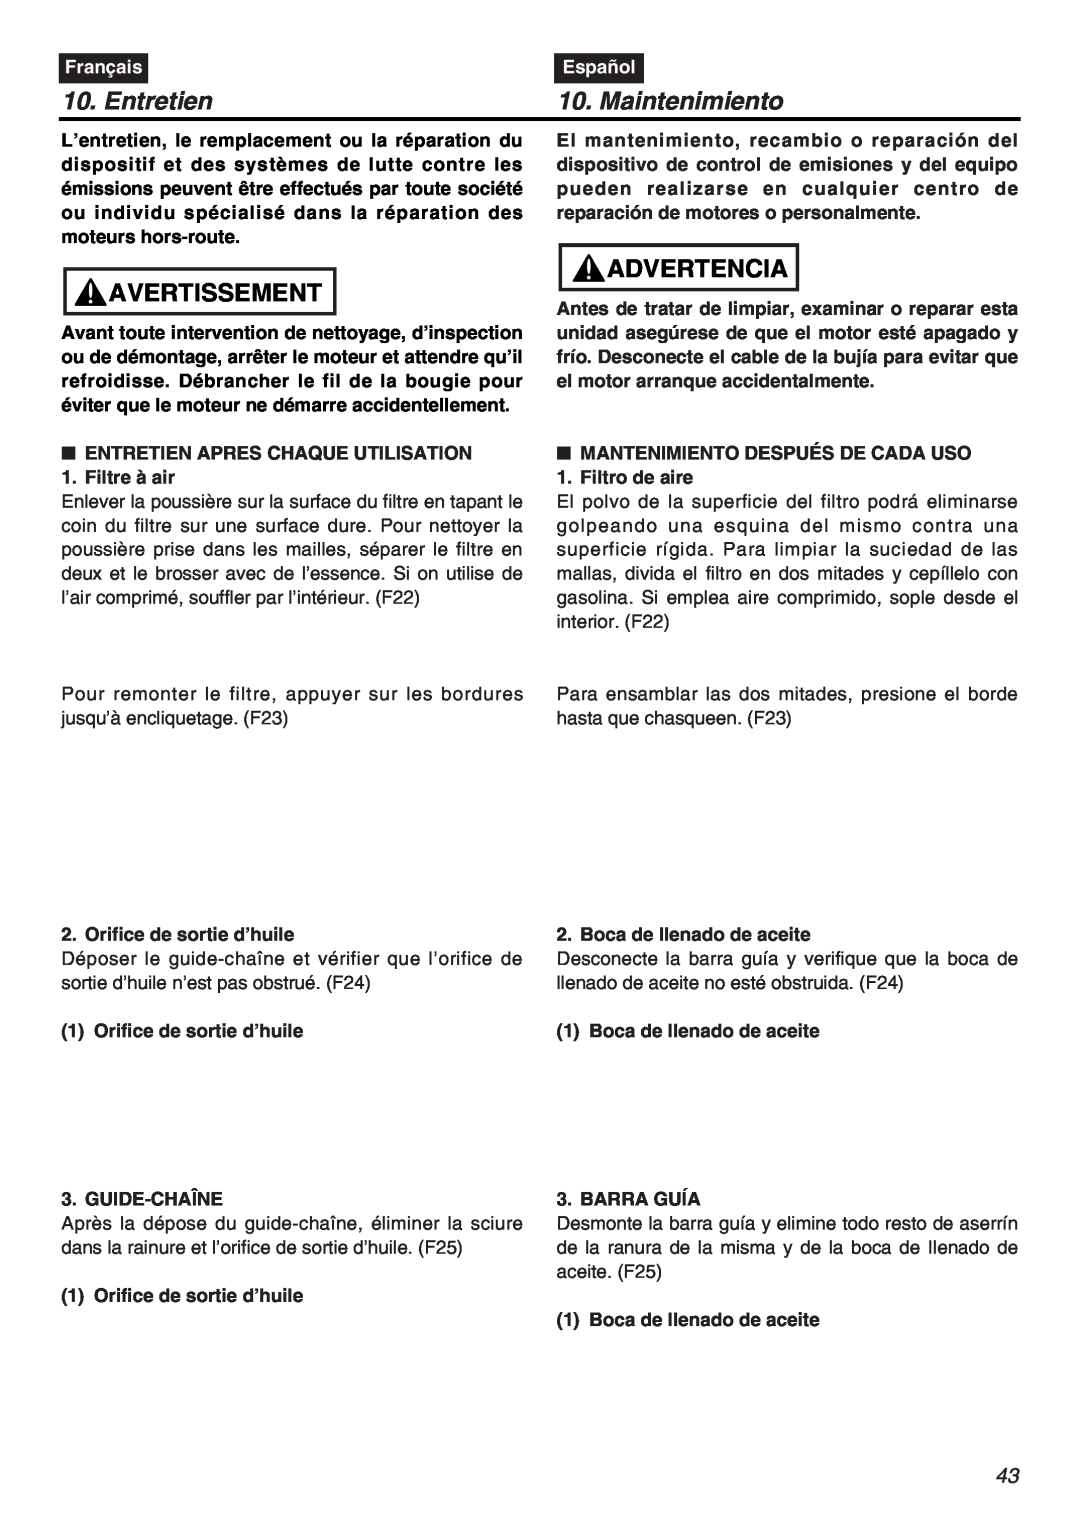 RedMax G5000AVS manual Entretien, Maintenimiento, Avertissement, Advertencia, Français, Español 